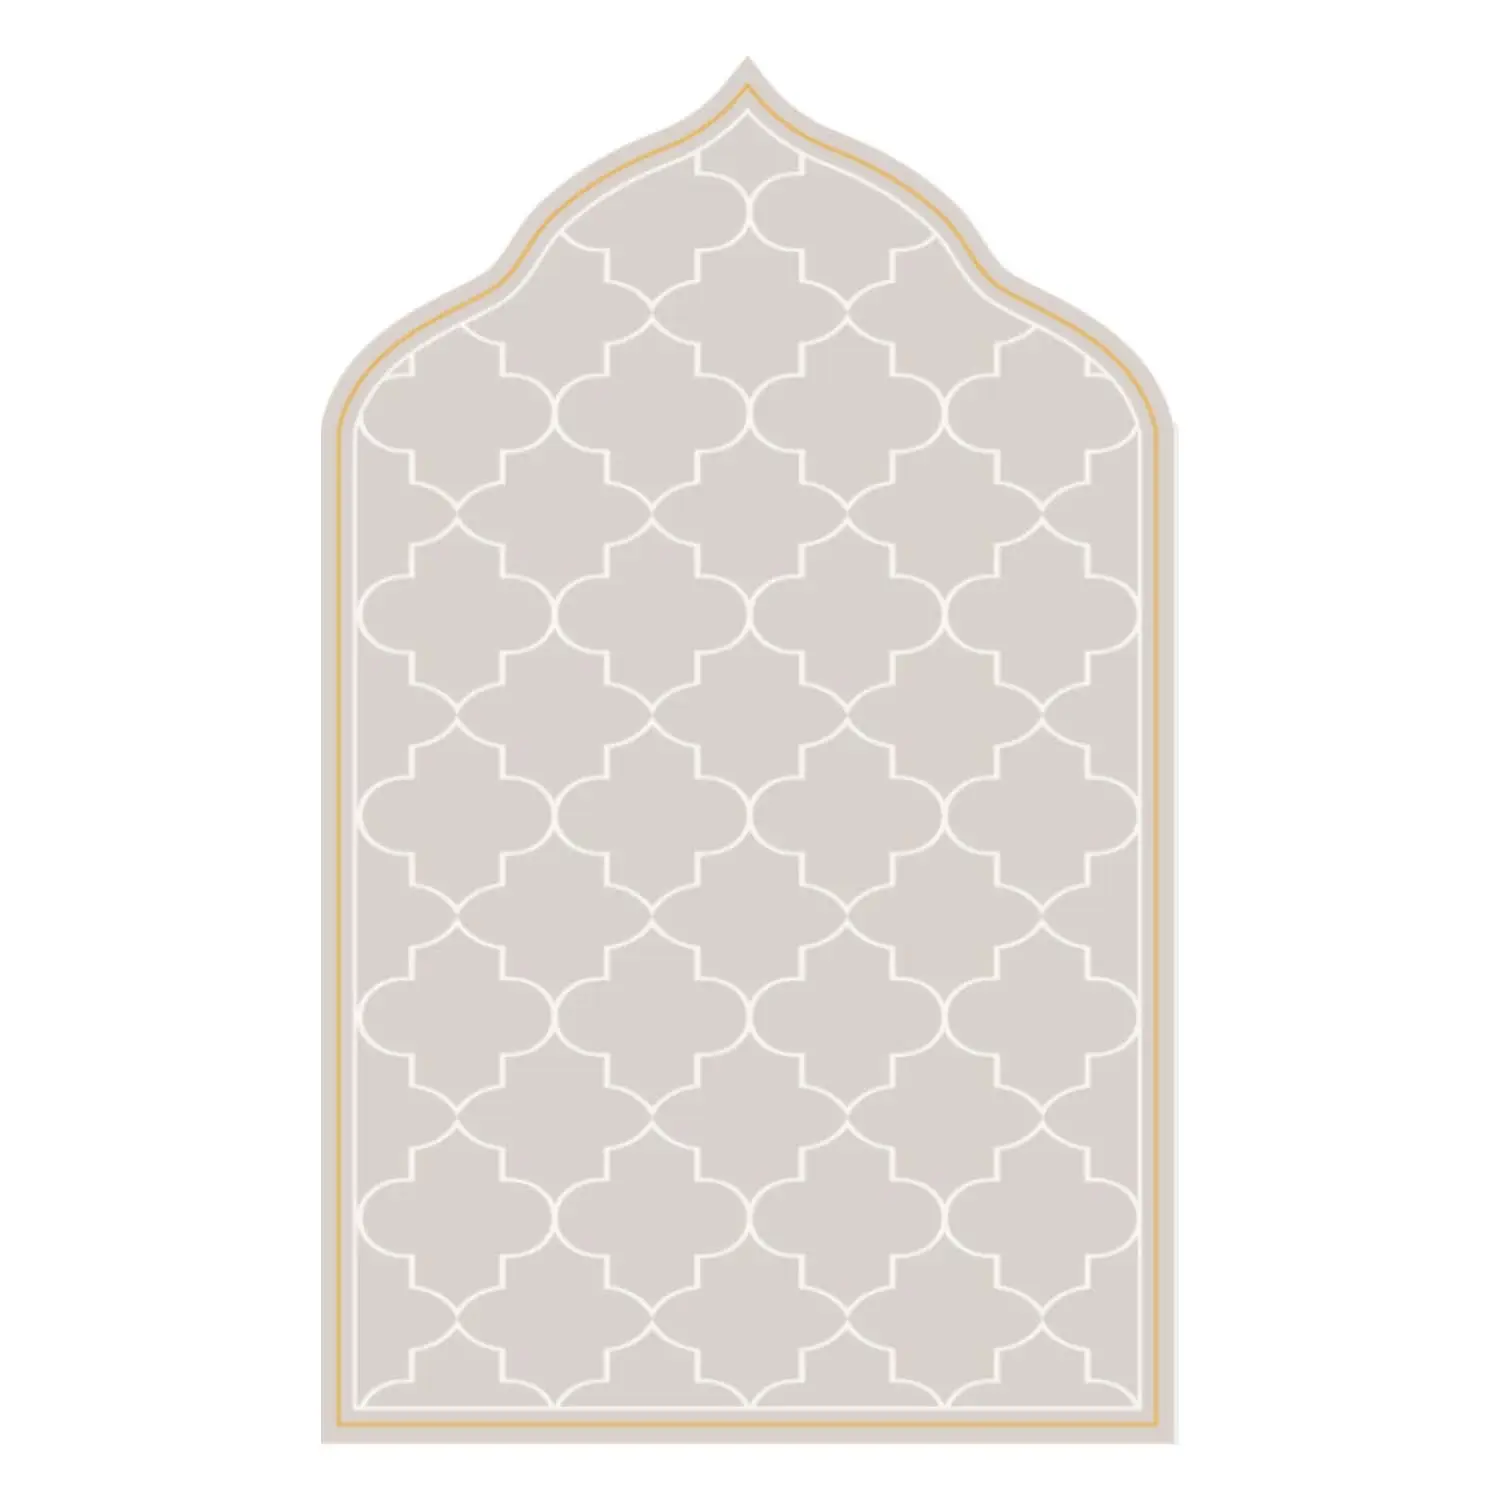 Prayer Rug Islamic Mat Muslim Men Women Portable Mat Turkish Pocket Pray Rug Thick Large Padded Sajadah Velvet Carpet